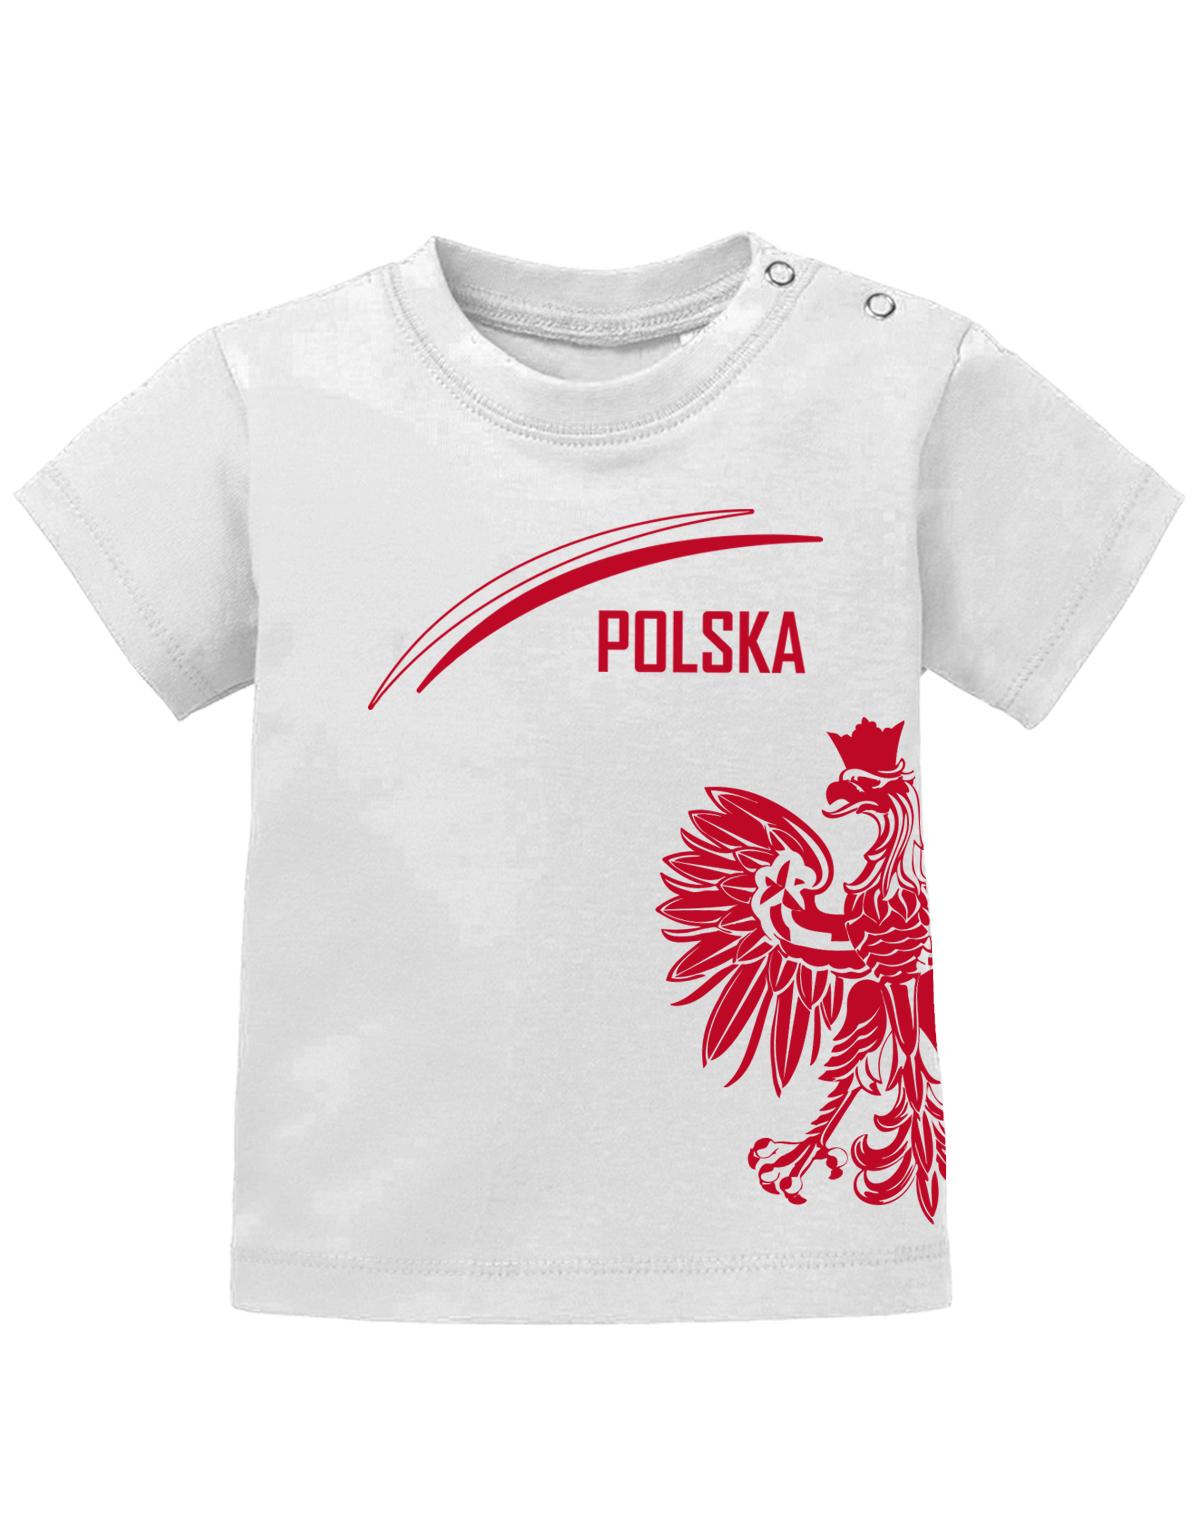 Polska-Adler-Baby-Shirt-Weiss